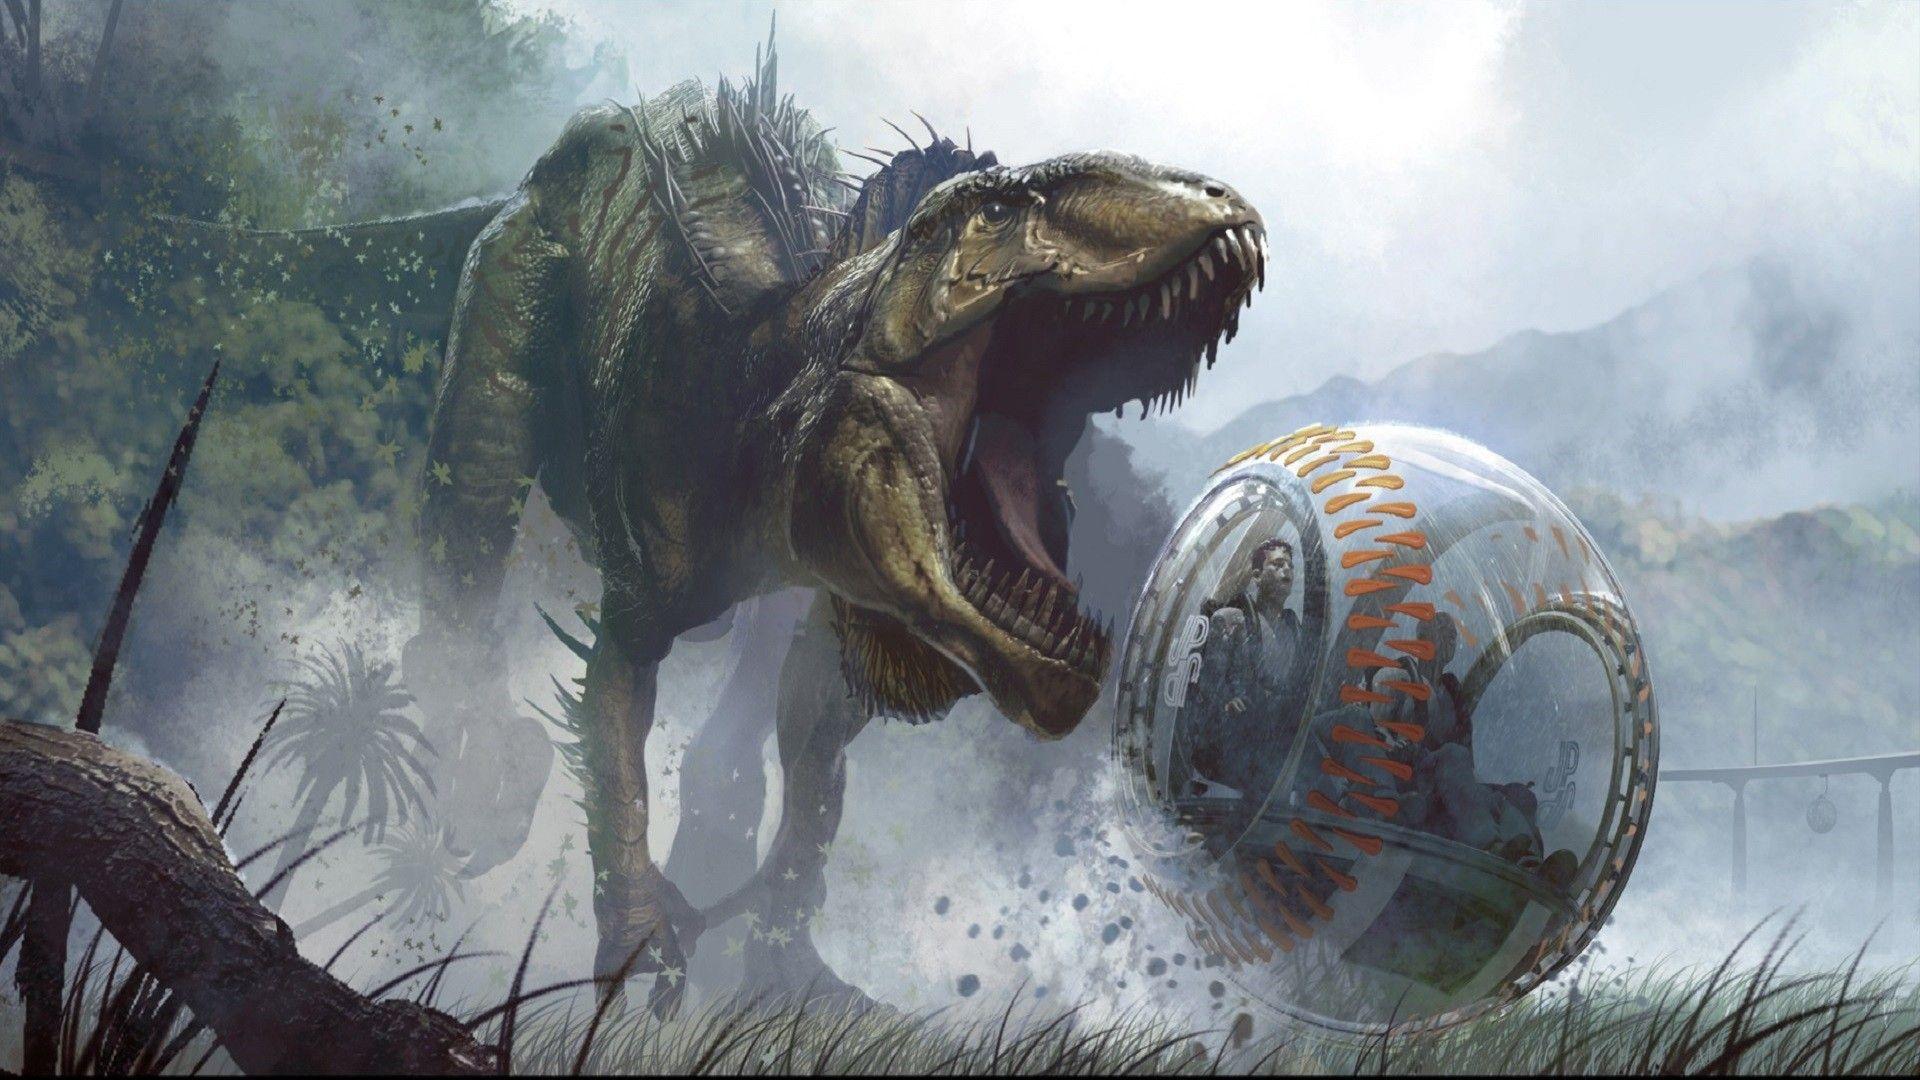 Jurassic Park and Jurassic World Wallpaper by Thekingblader995 on DeviantArt